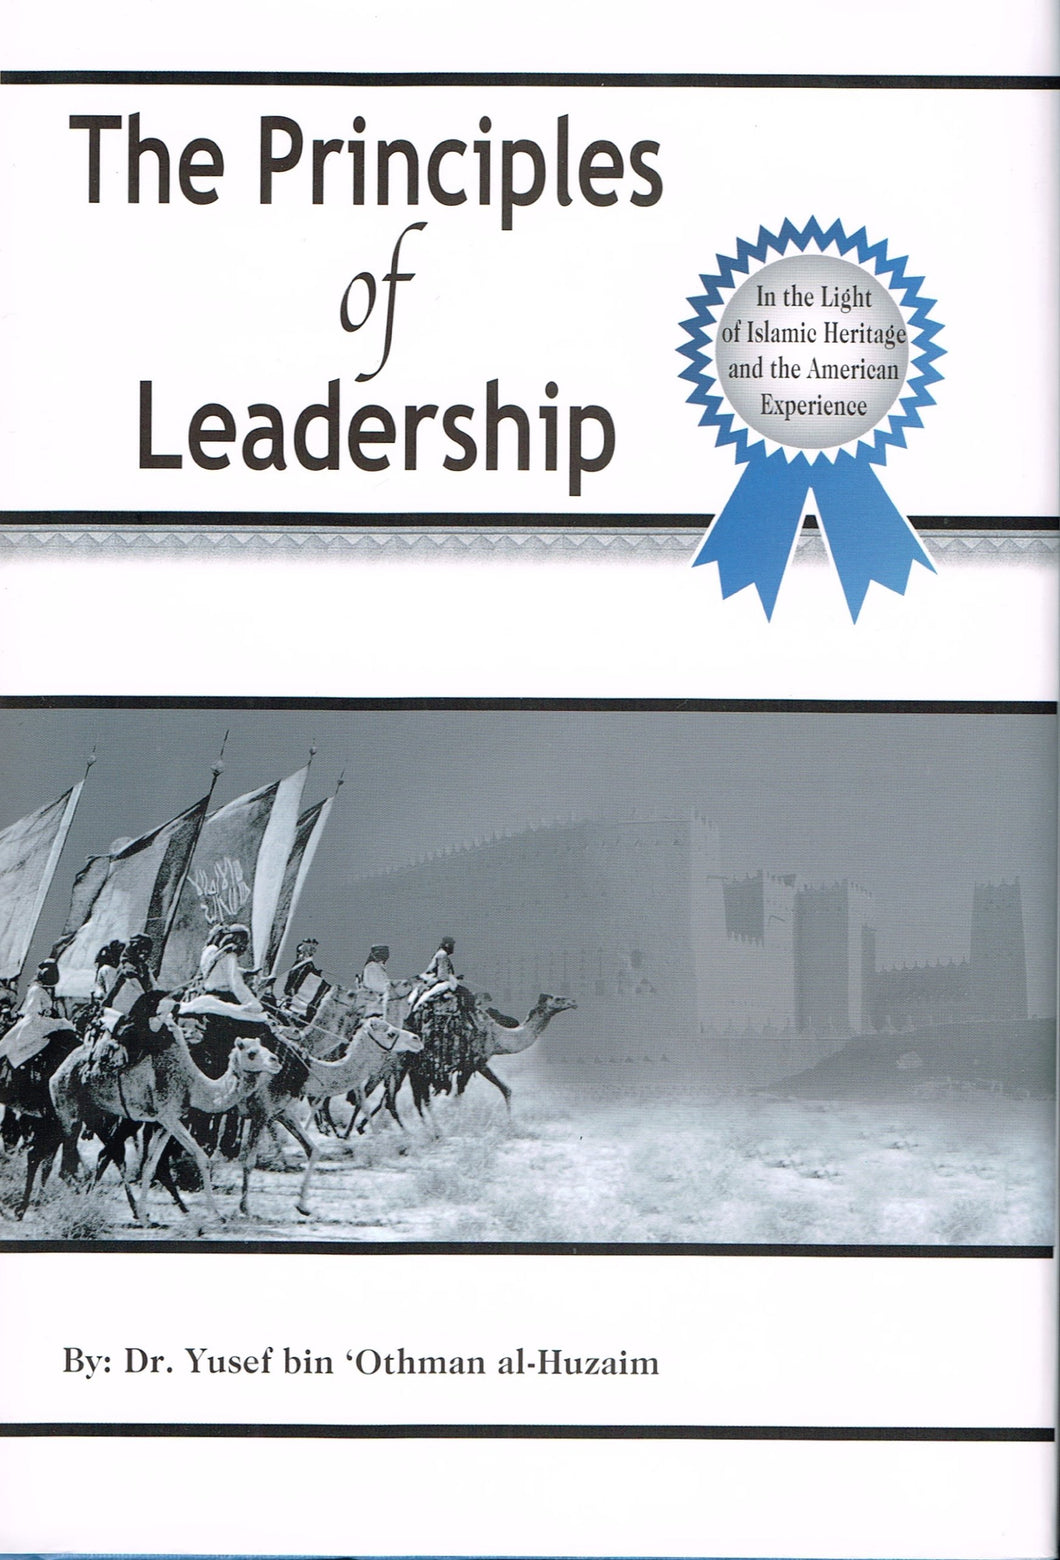 The Principles of Leadership